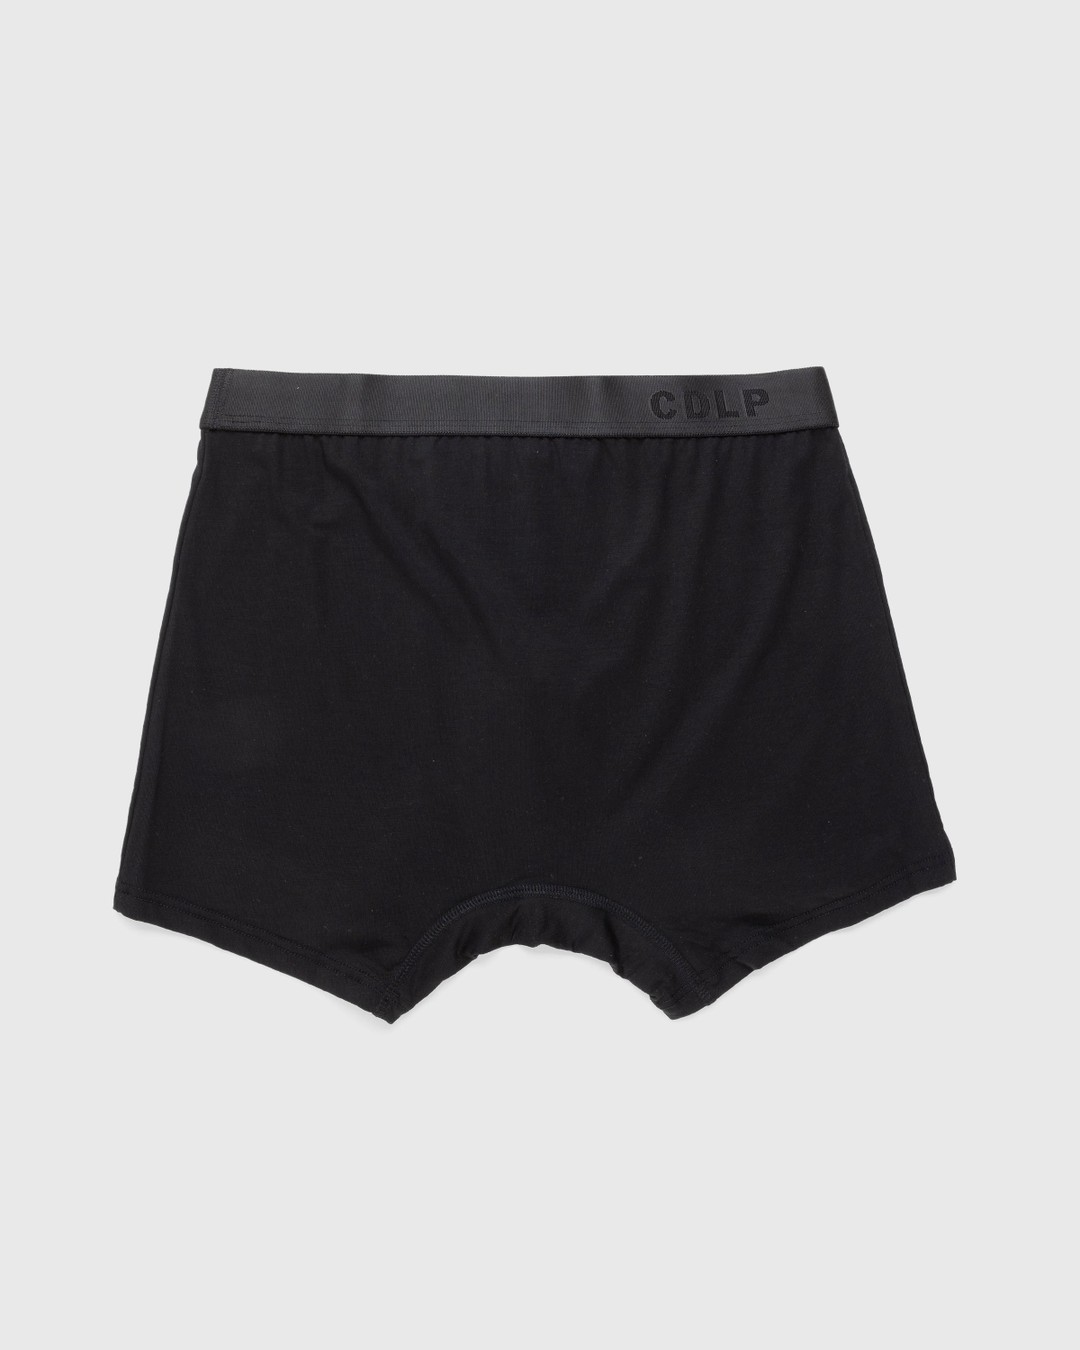 CDLP – Boxer Briefs Black - Underwear - Black - Image 2